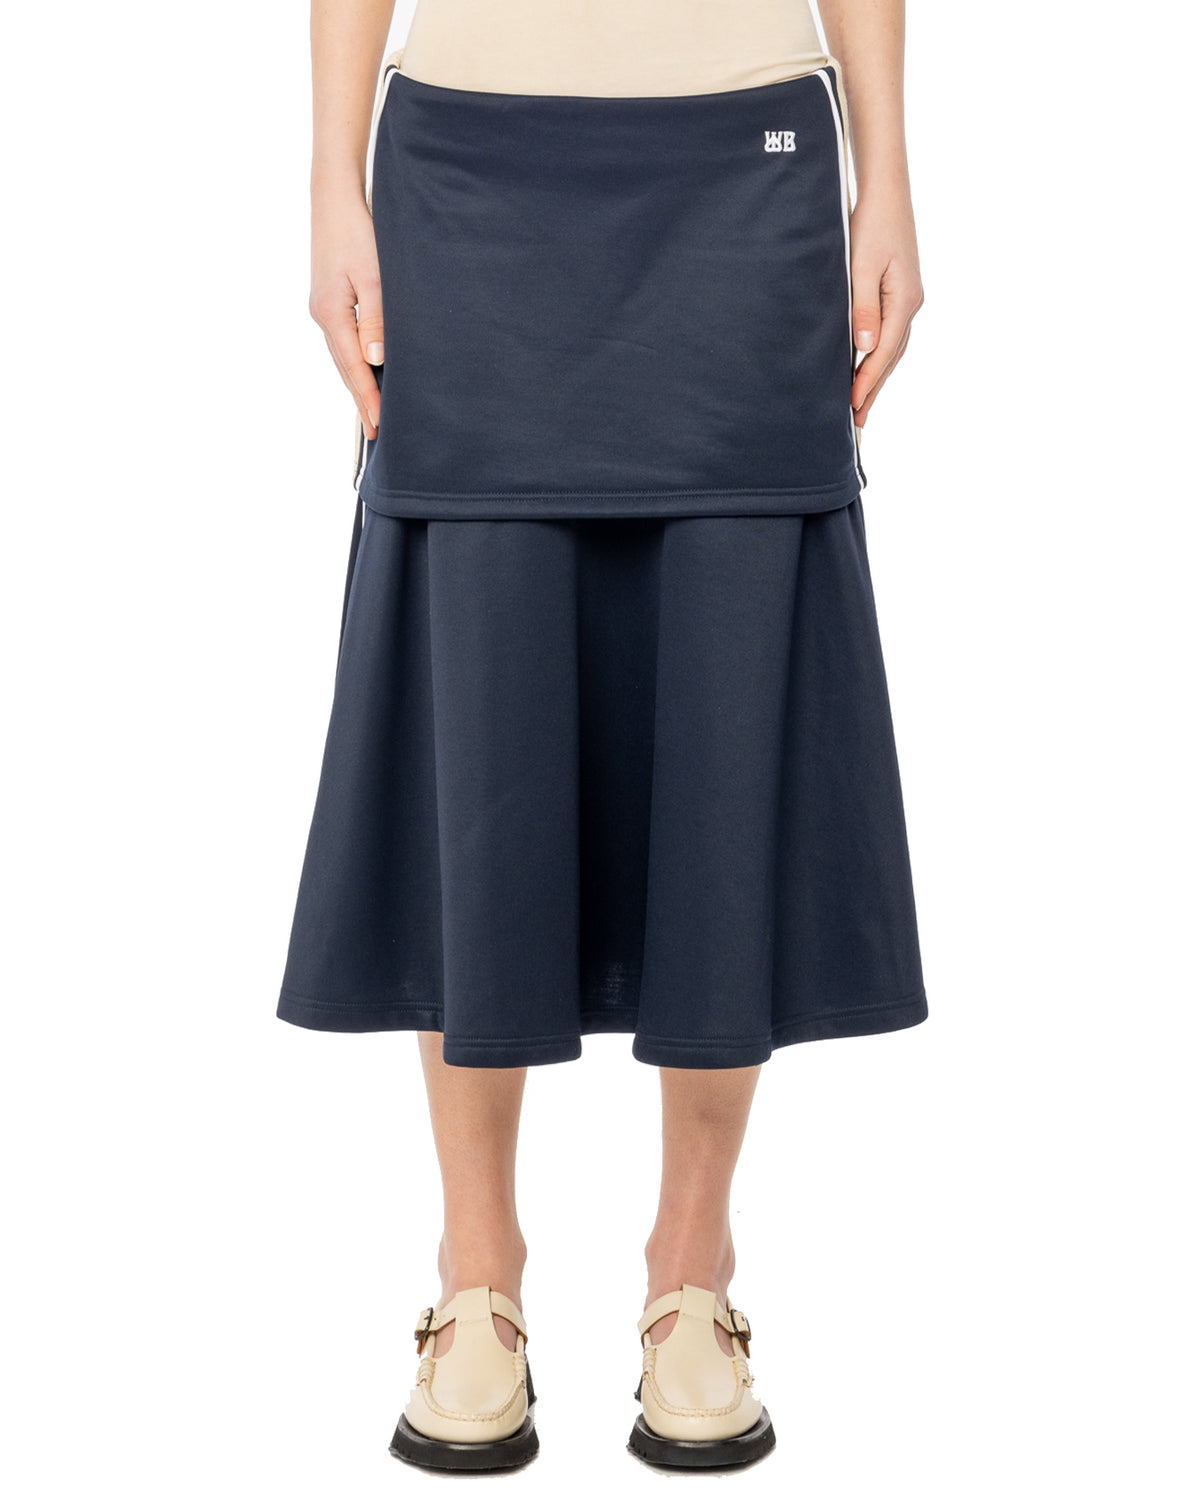 Mantra Skirt - Navy